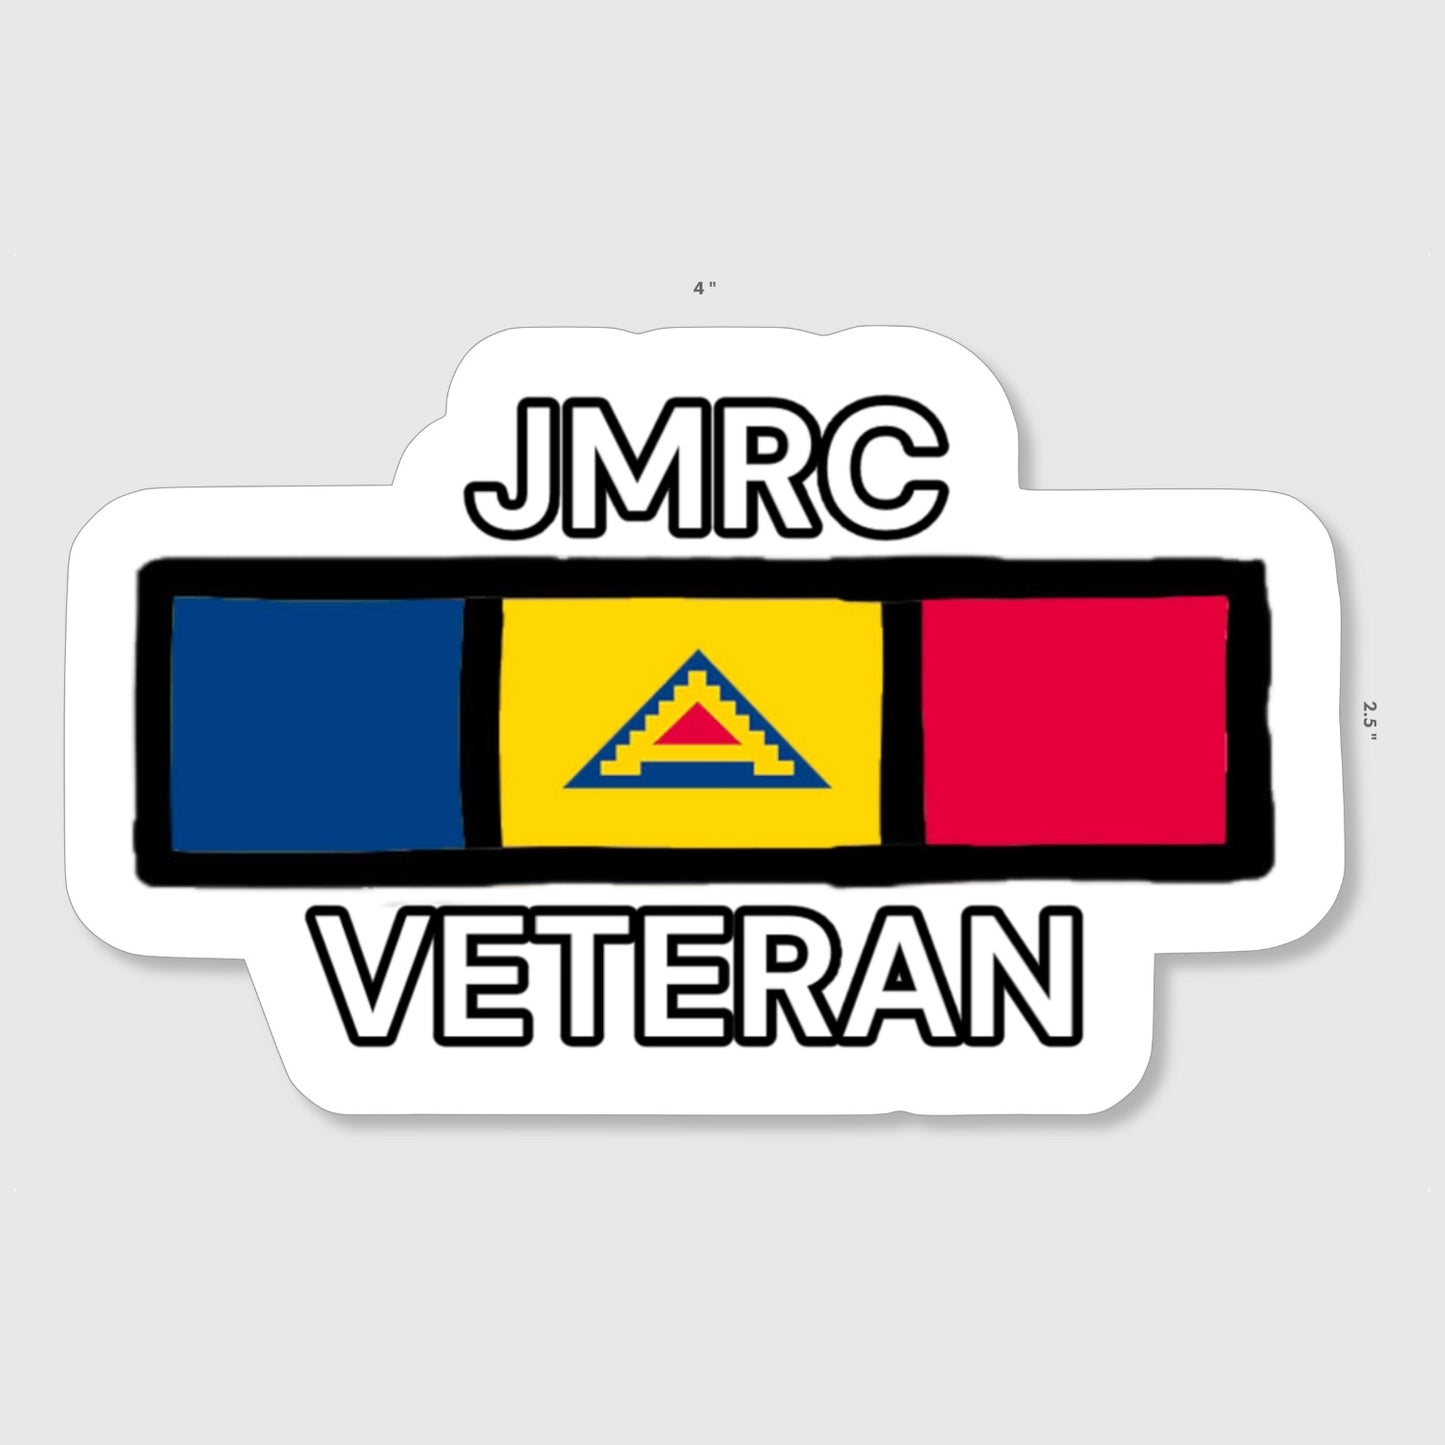 JMRC Veteran Sticker